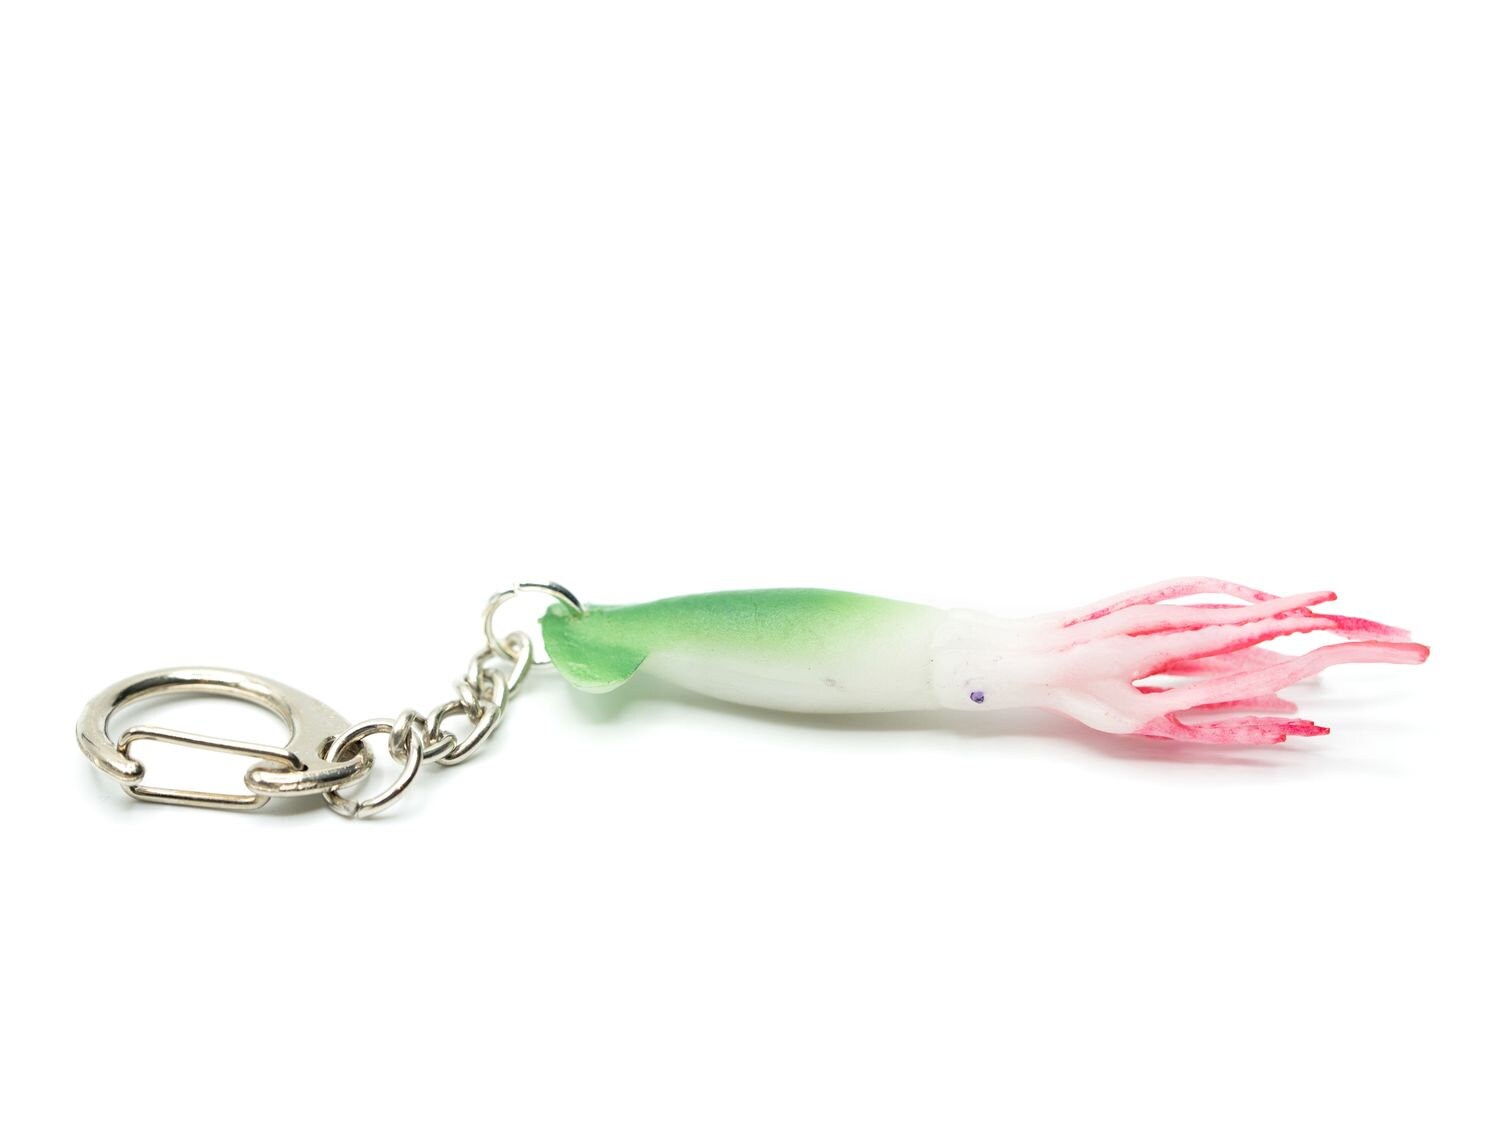 Tintenfisch Schlüsselanhänger Anhänger Schlüsselring Oktopus Sepia Grün Weiß Rot von Miniblings